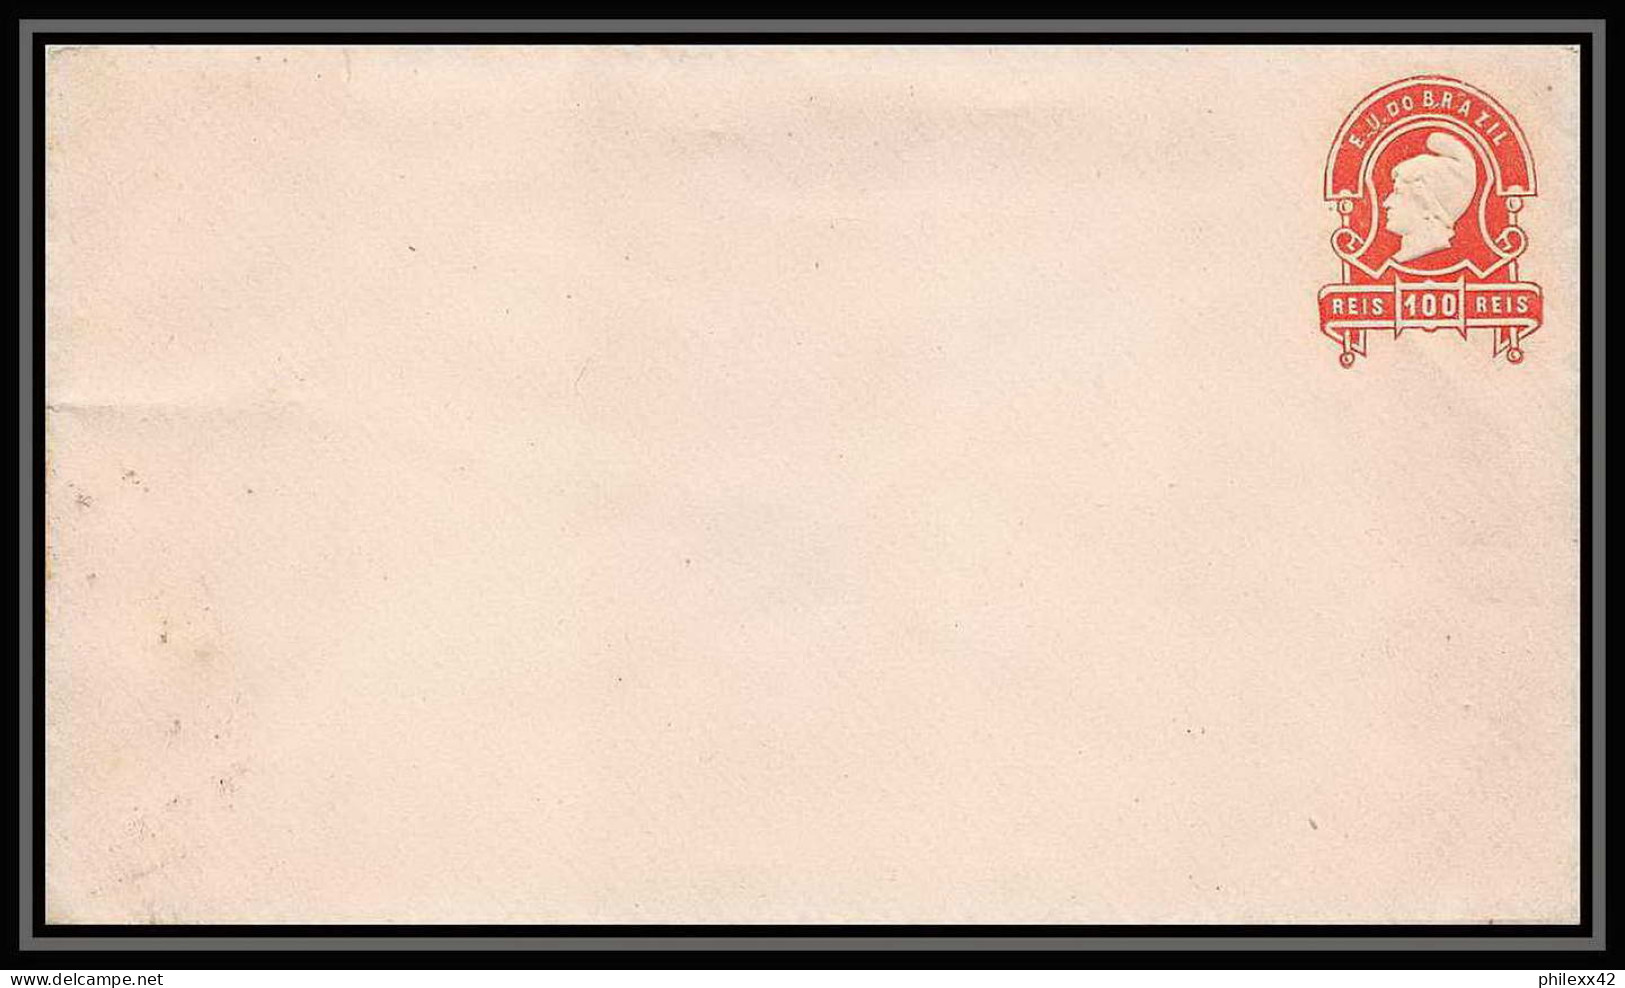 4045/ Brésil (brazil) Entier Stationery Enveloppe (cover) N°8 Neuf (mint) - Entiers Postaux